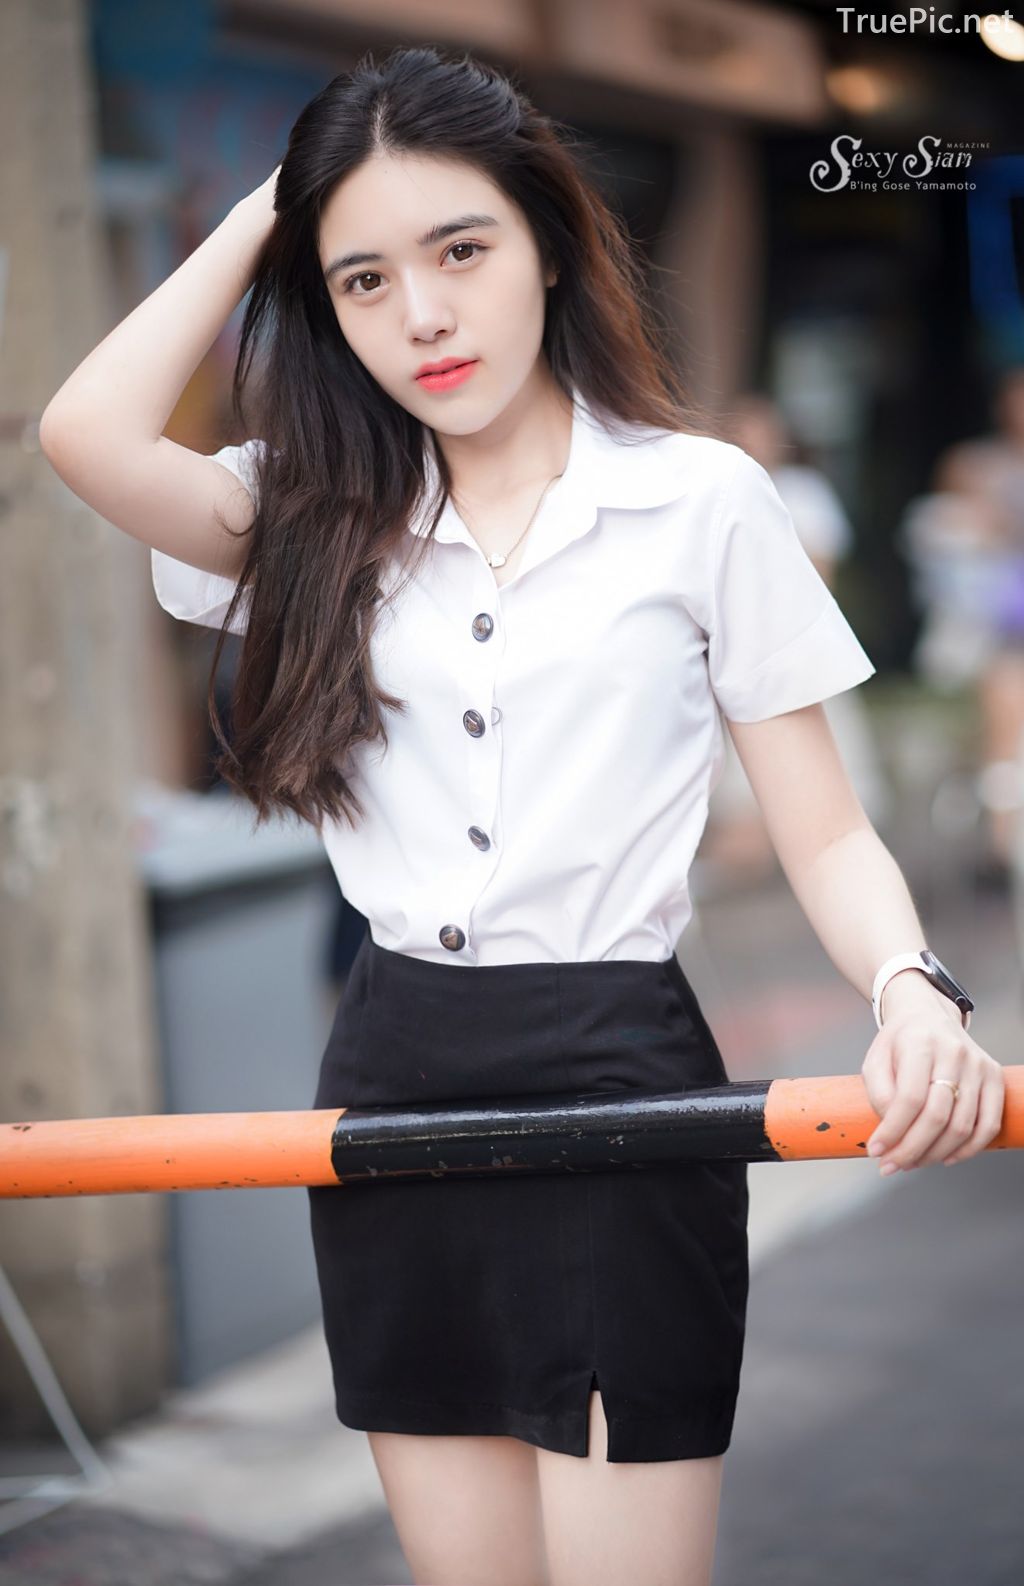 Thailand beautiful girl - Chonticha Chalimewong - Thai Girl Student uniform - TruePic.net - Picture 17